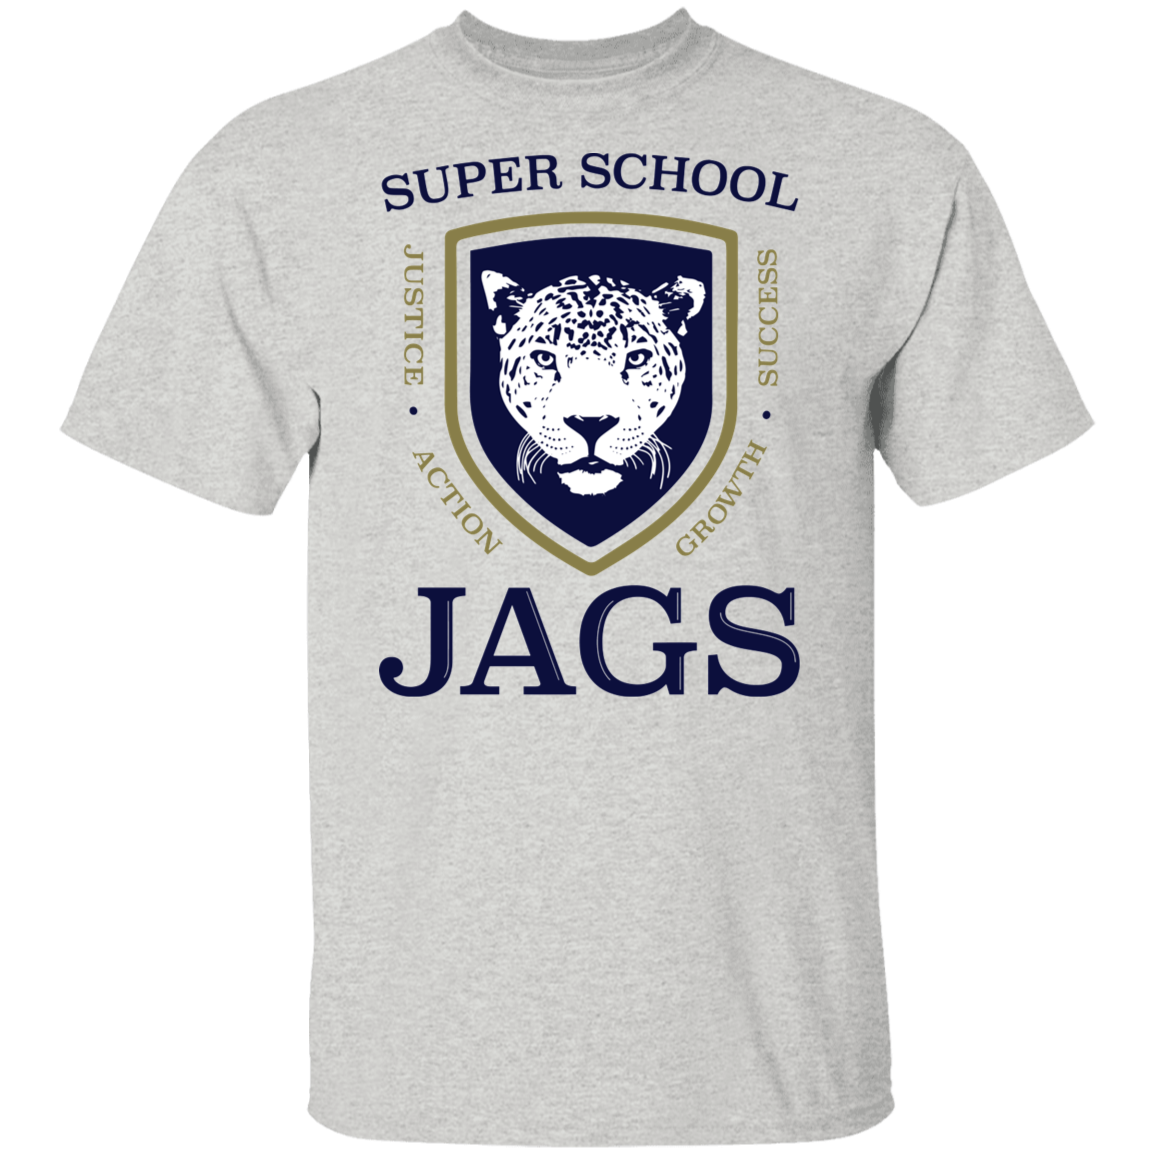 Basic T-Shirt Youth & Adult - Super School